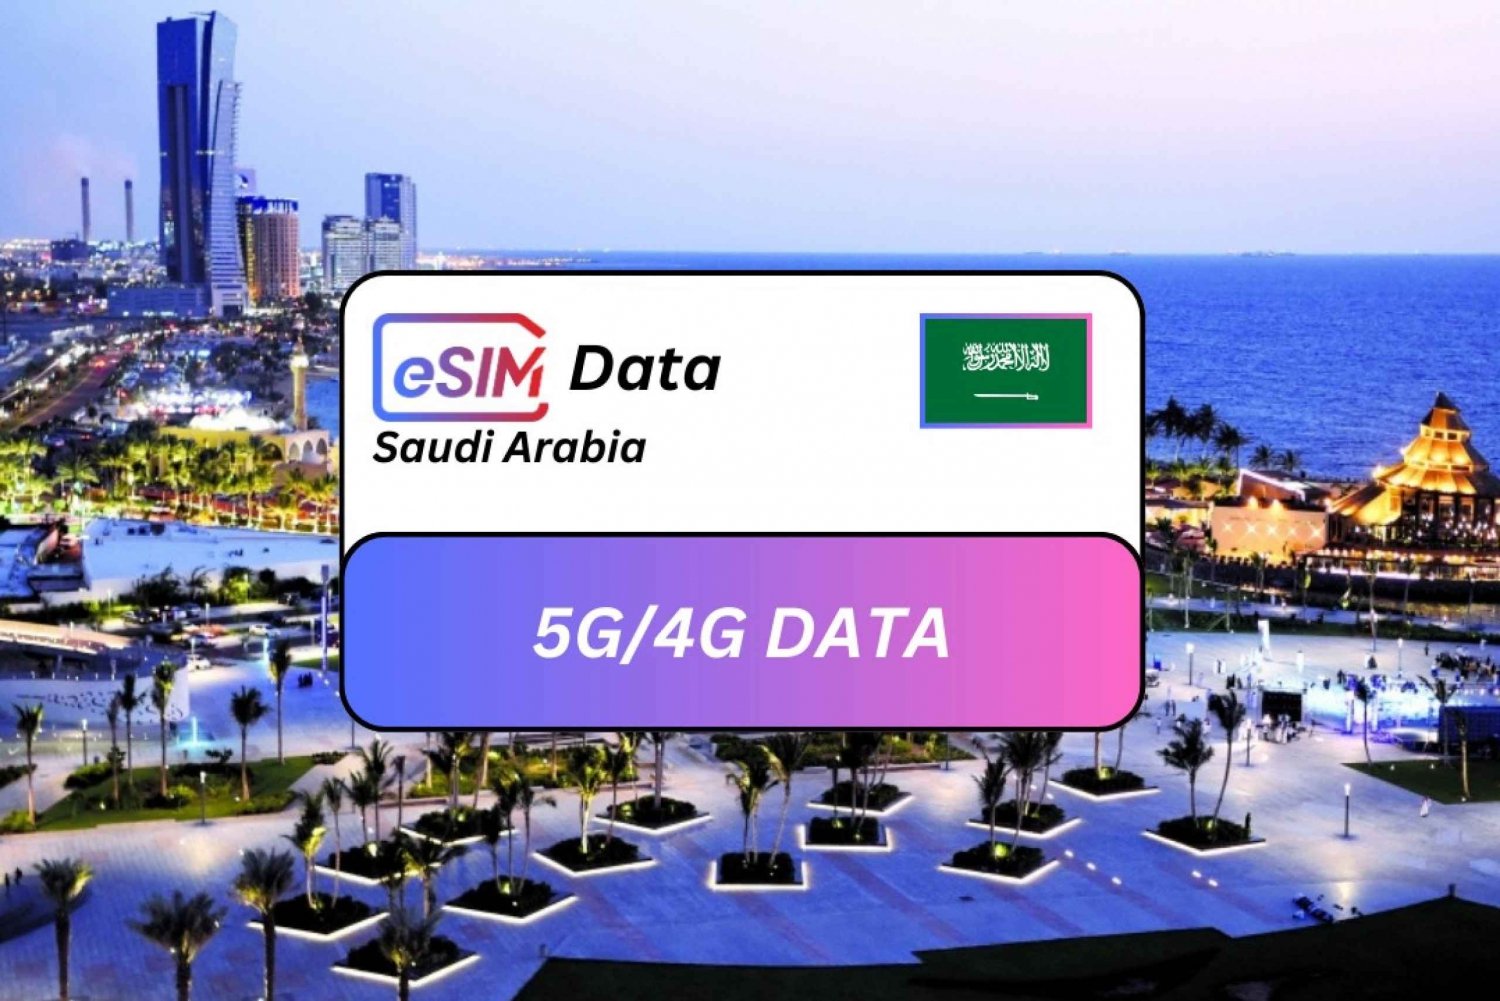 Jeddah: Saudi Arabia eSIM Roaming Data Plan